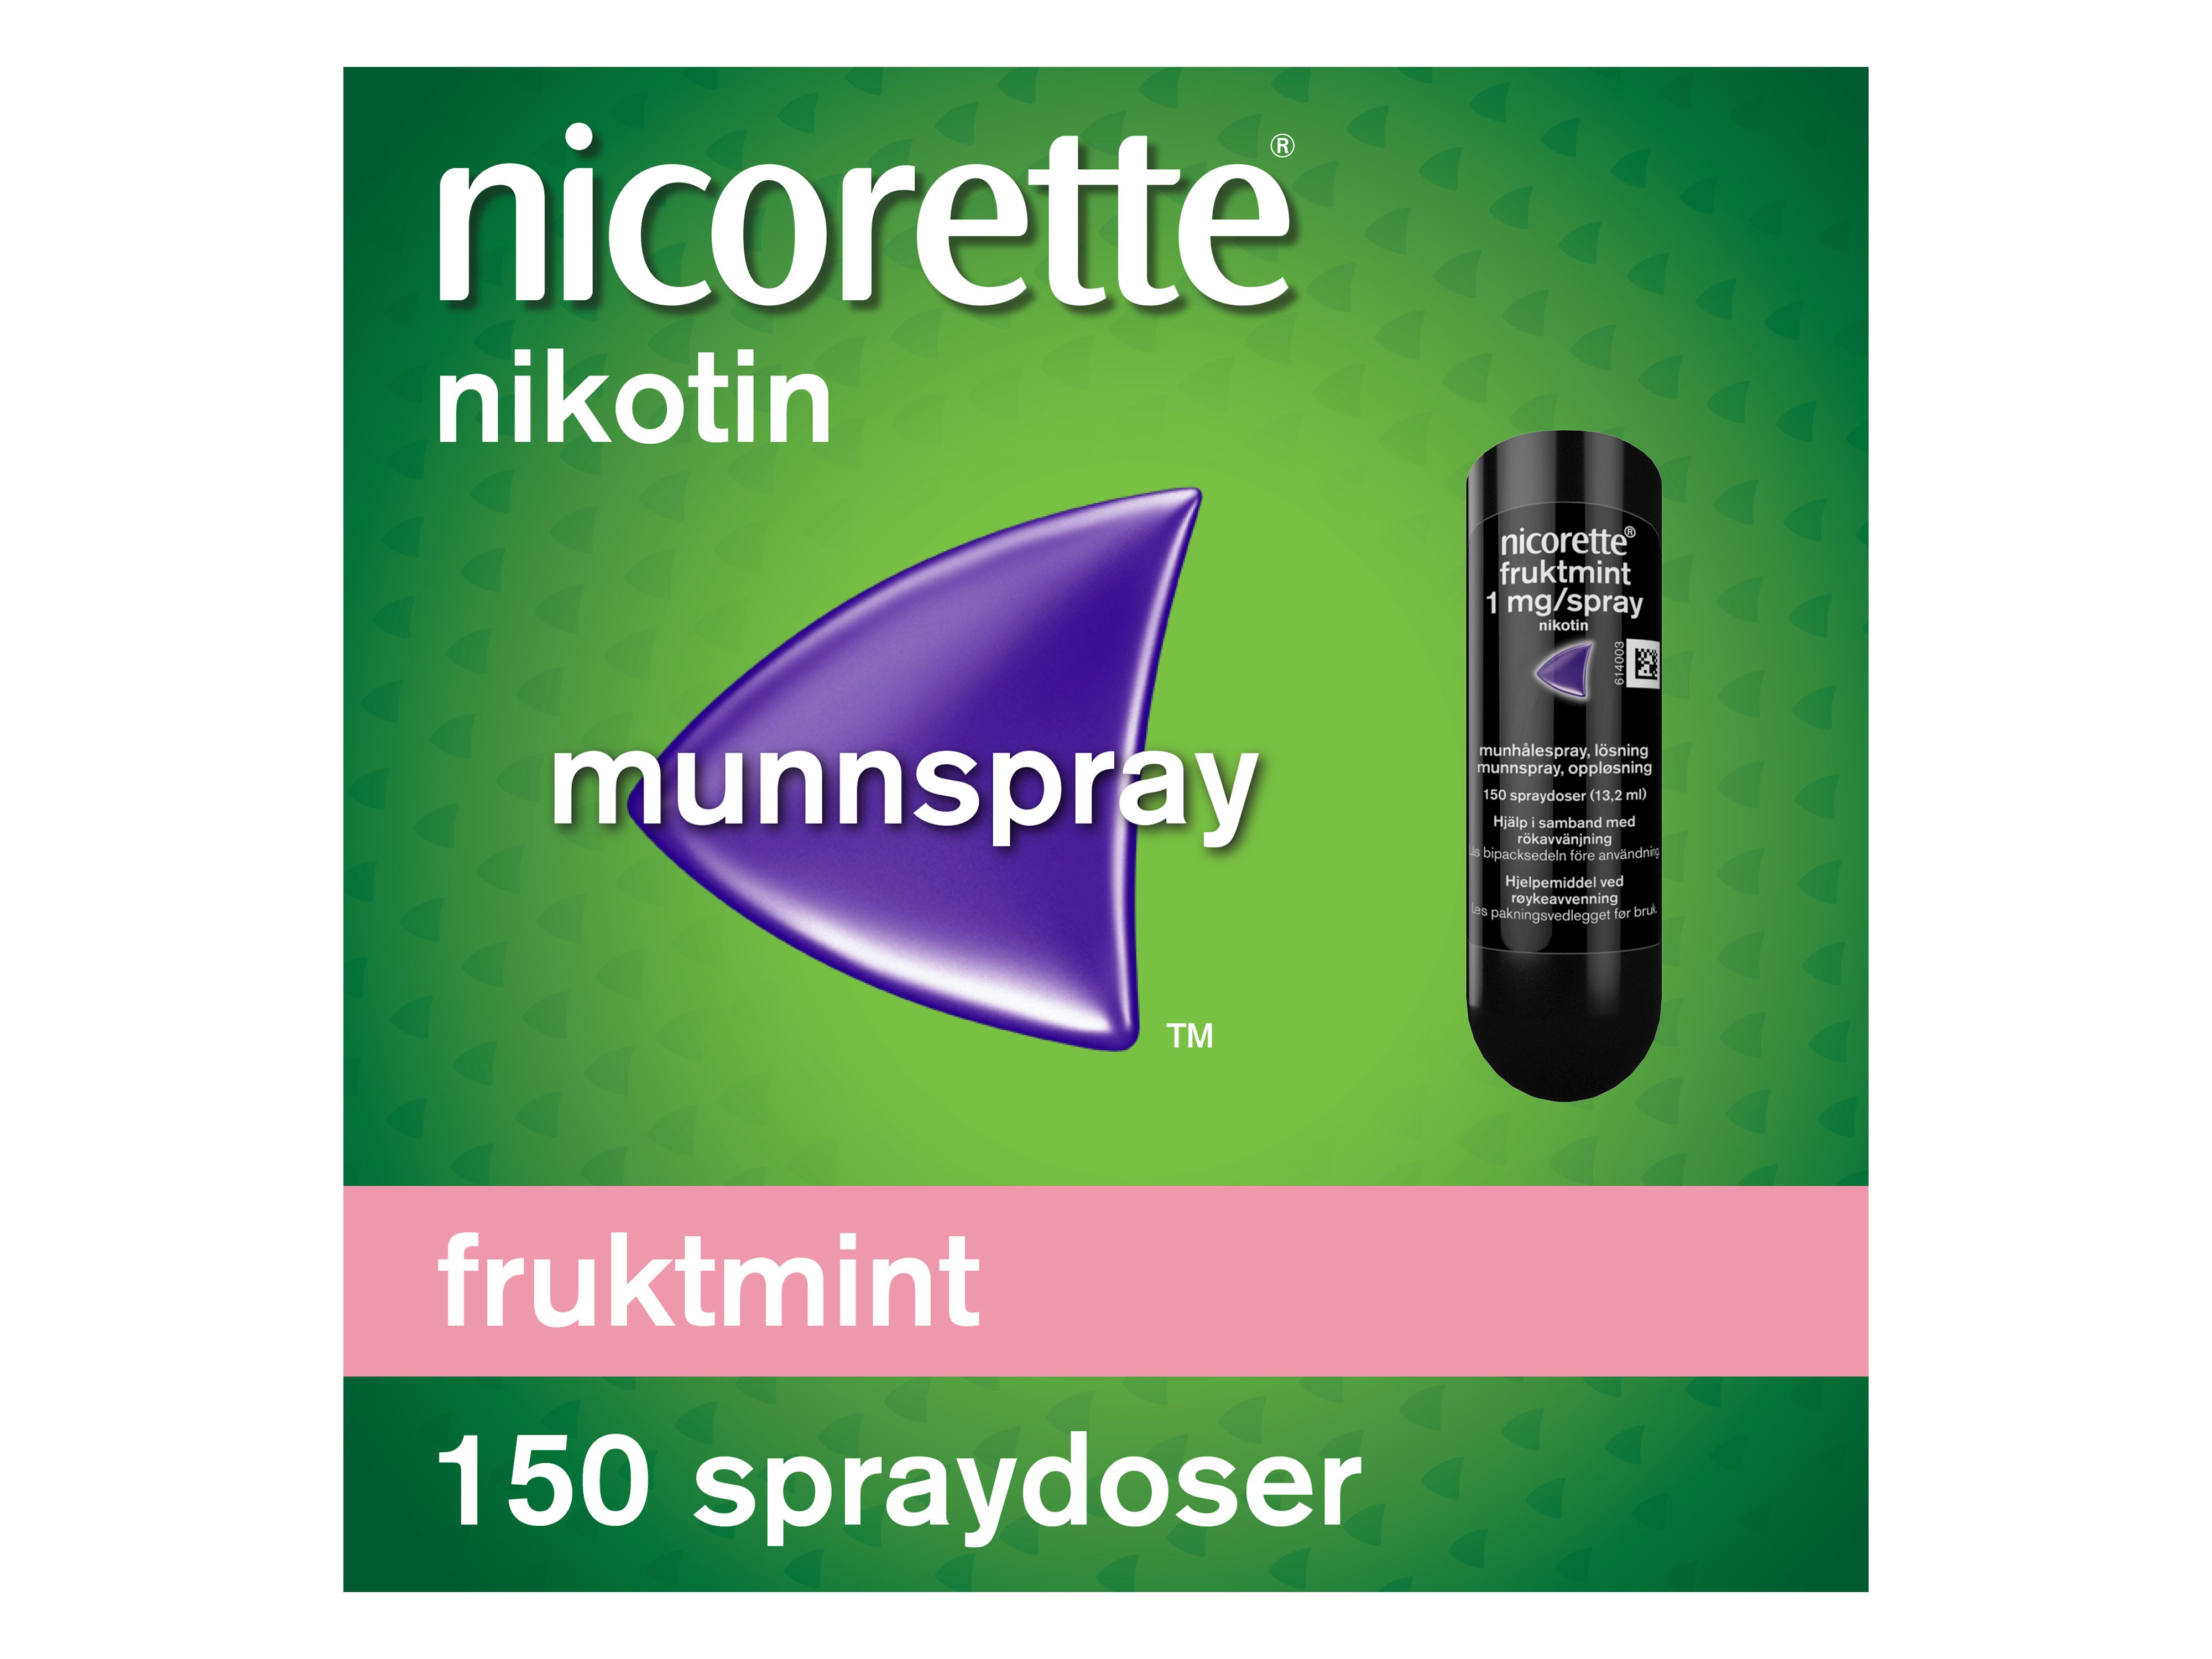 Nicorette 1 mg/dose munnspray, Fruktmint, 150 stk. - Røykeslutt 